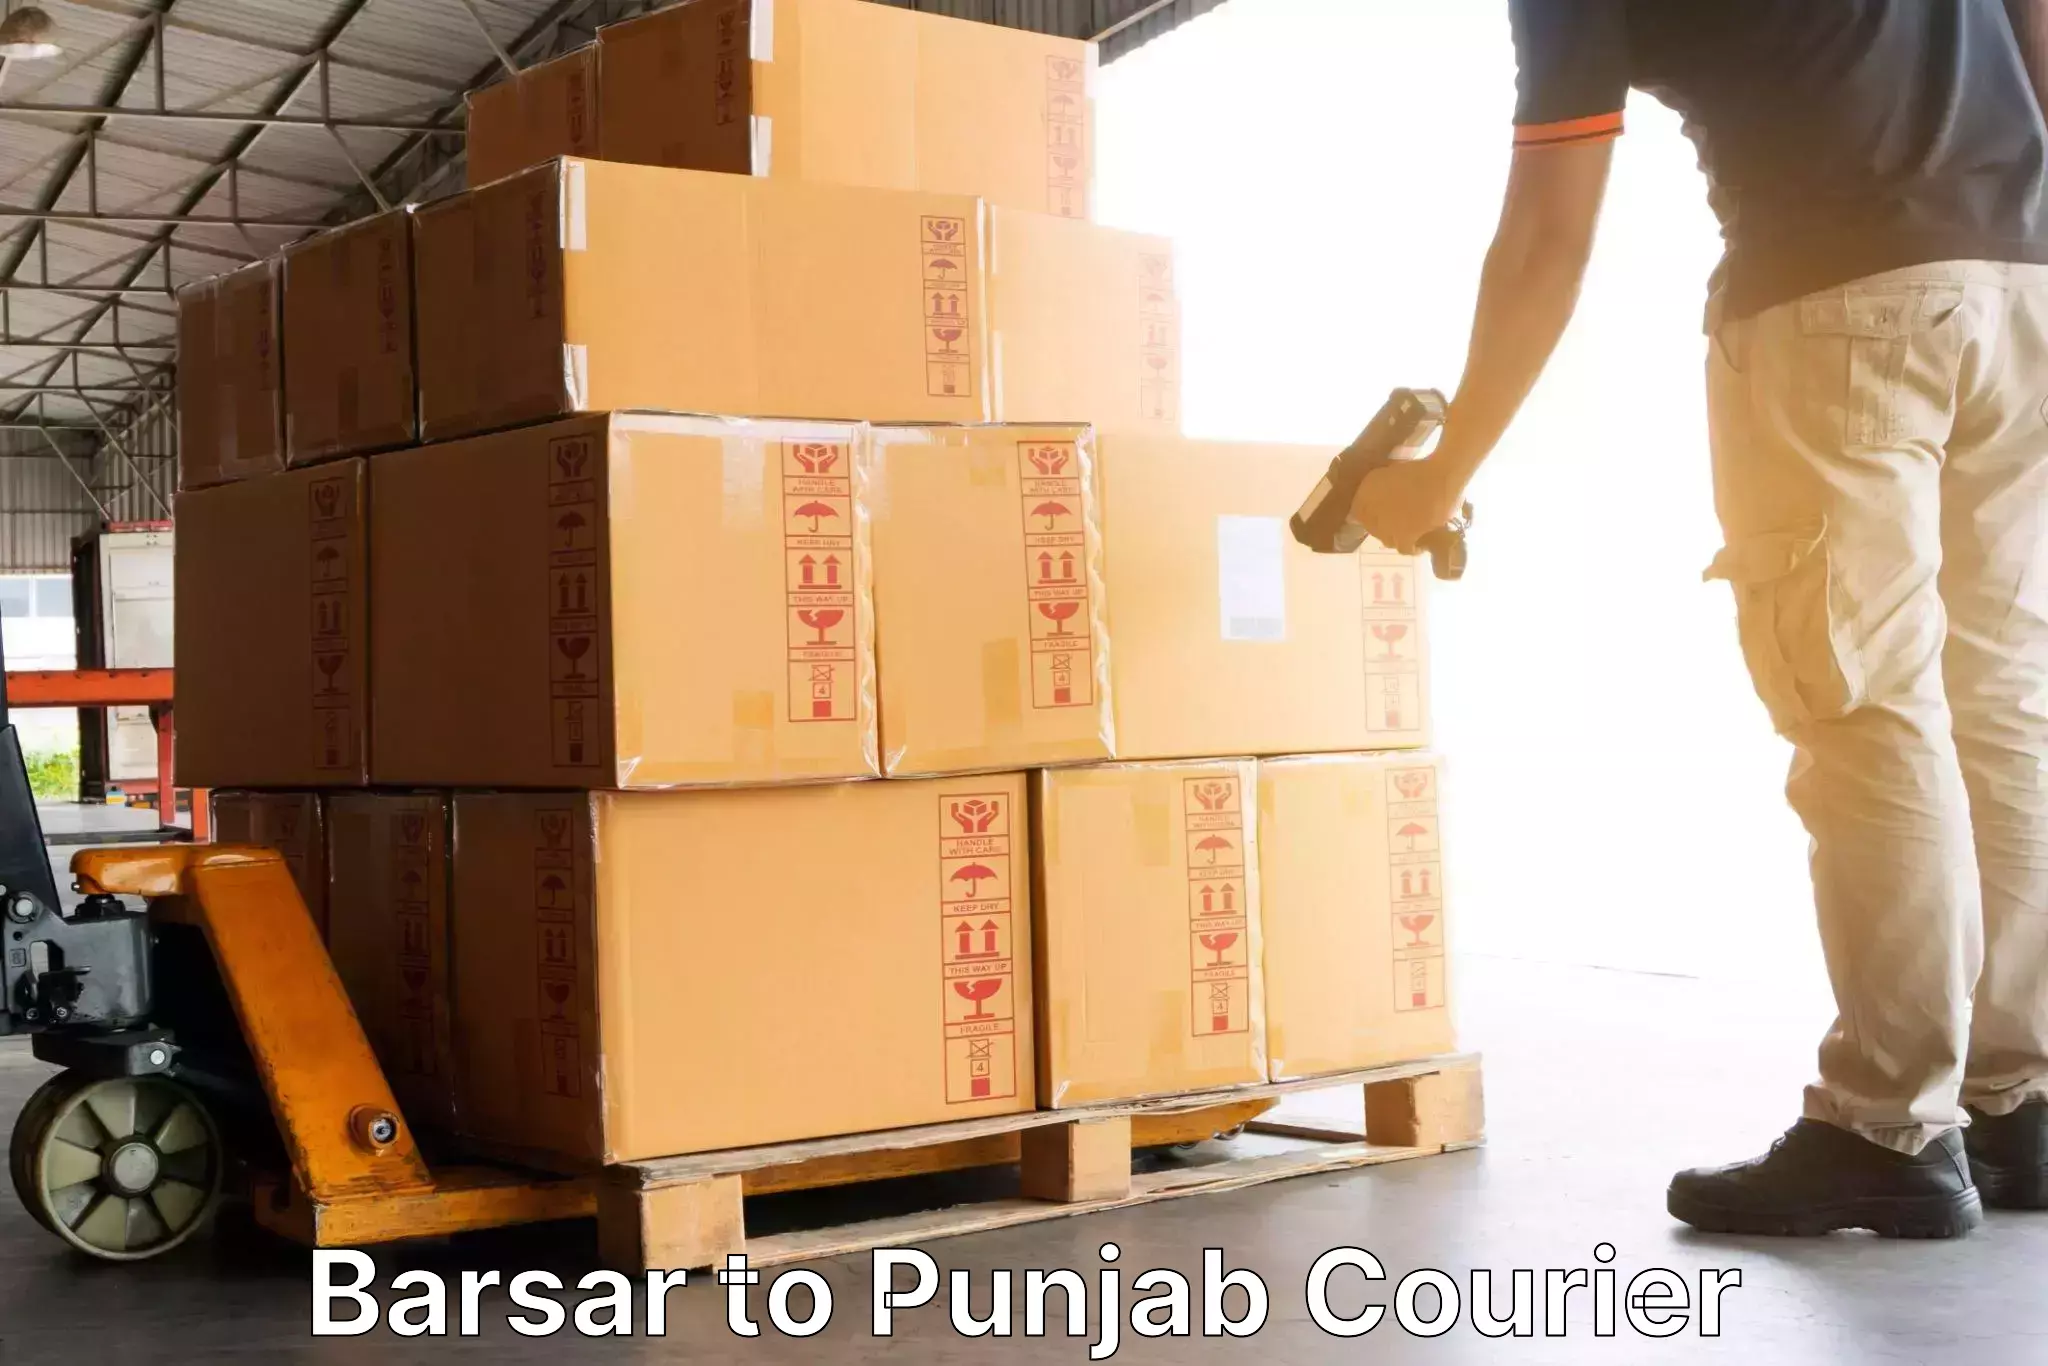 Quick booking process Barsar to Punjab